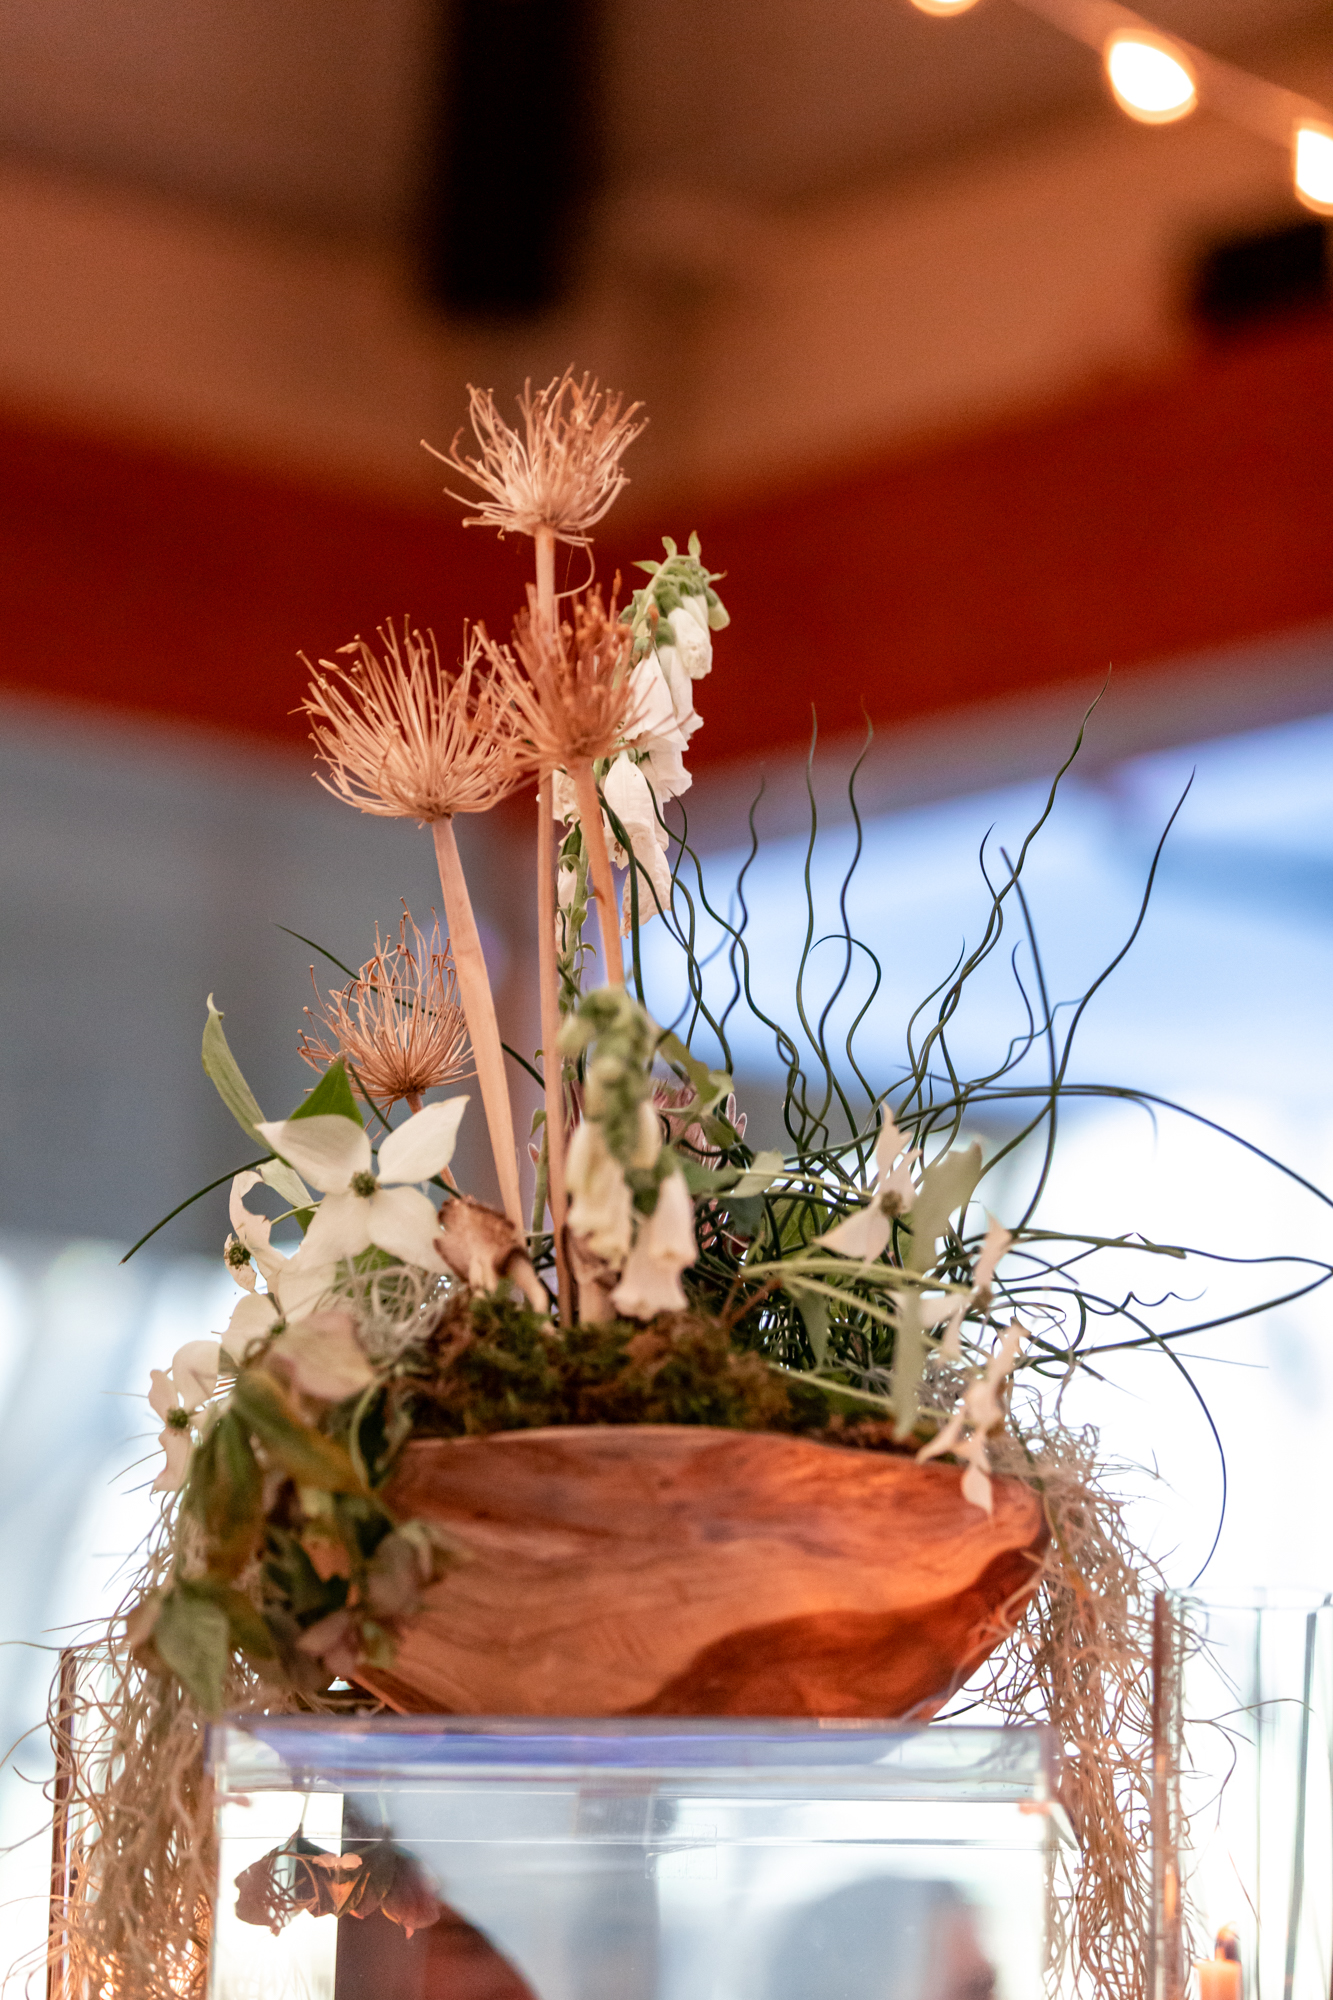 earthy florals at a kimmel center wedding reception